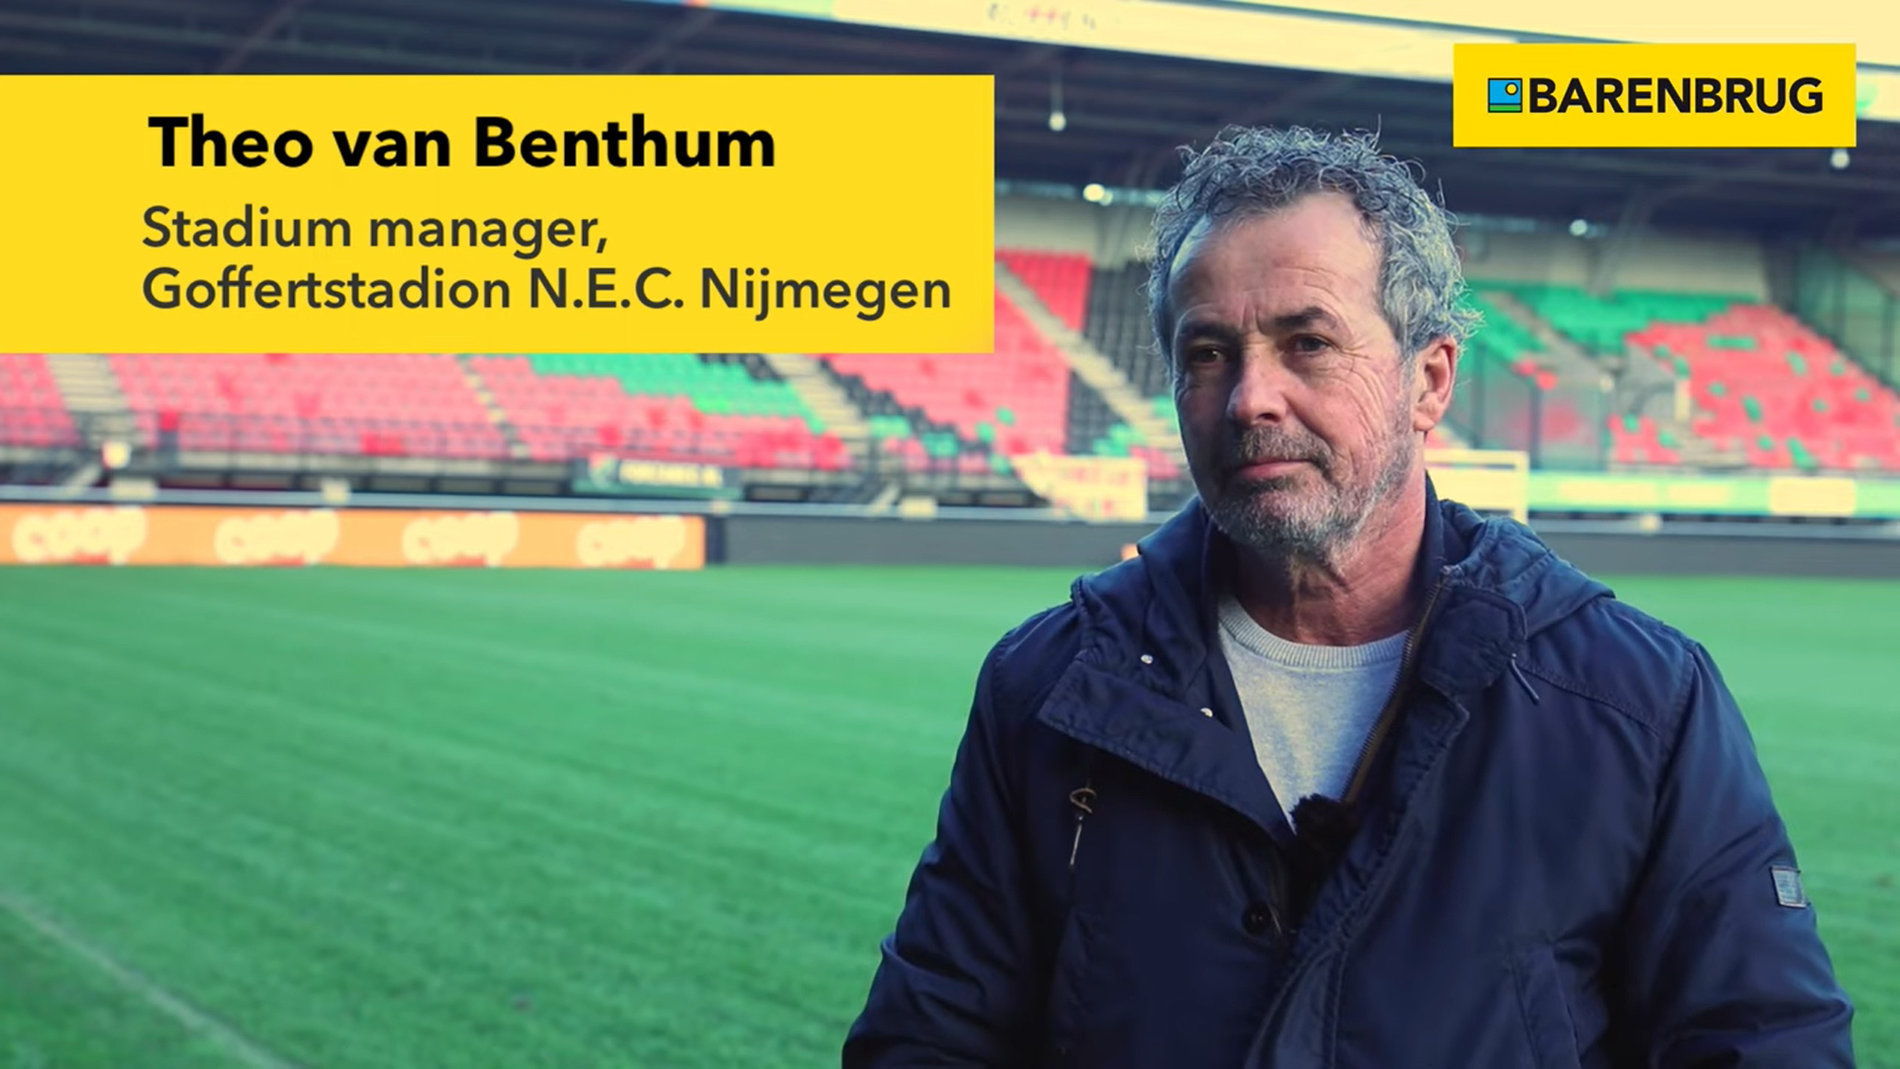 Theo van Benthum Stadium manager at N.E.C. Nijmegen 